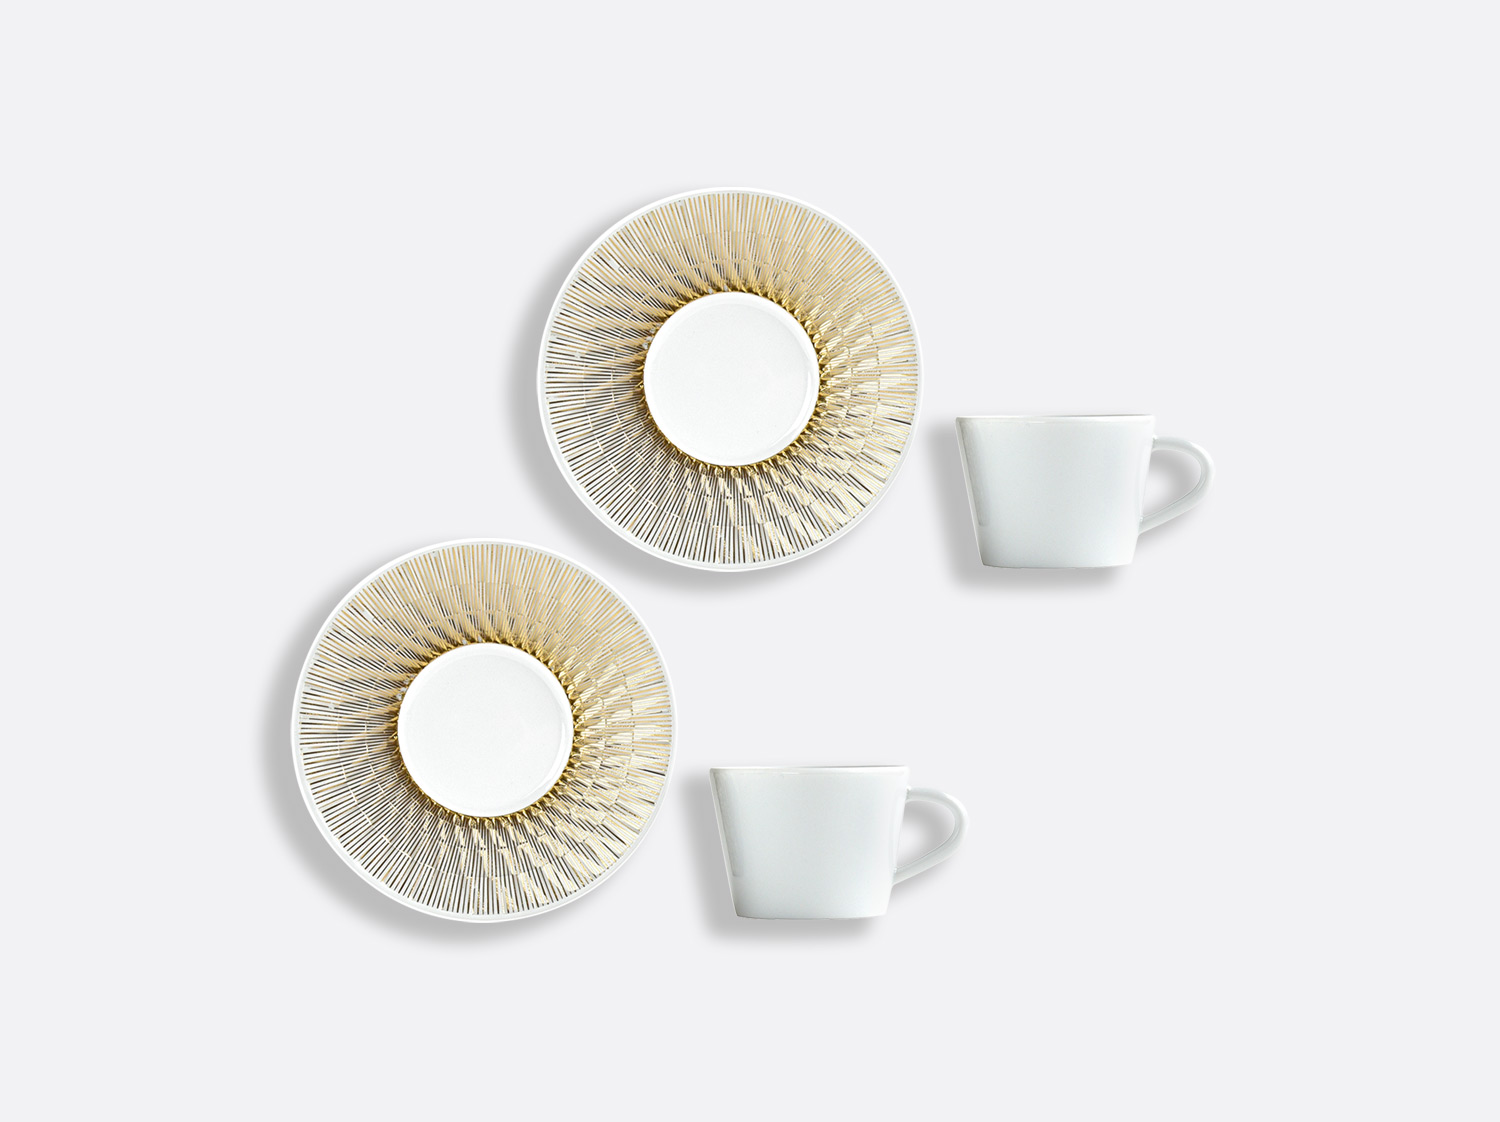 Set of 6 Colorful Porcelain Espresso Cup and Saucer Set - 2 oz, Gold Color  